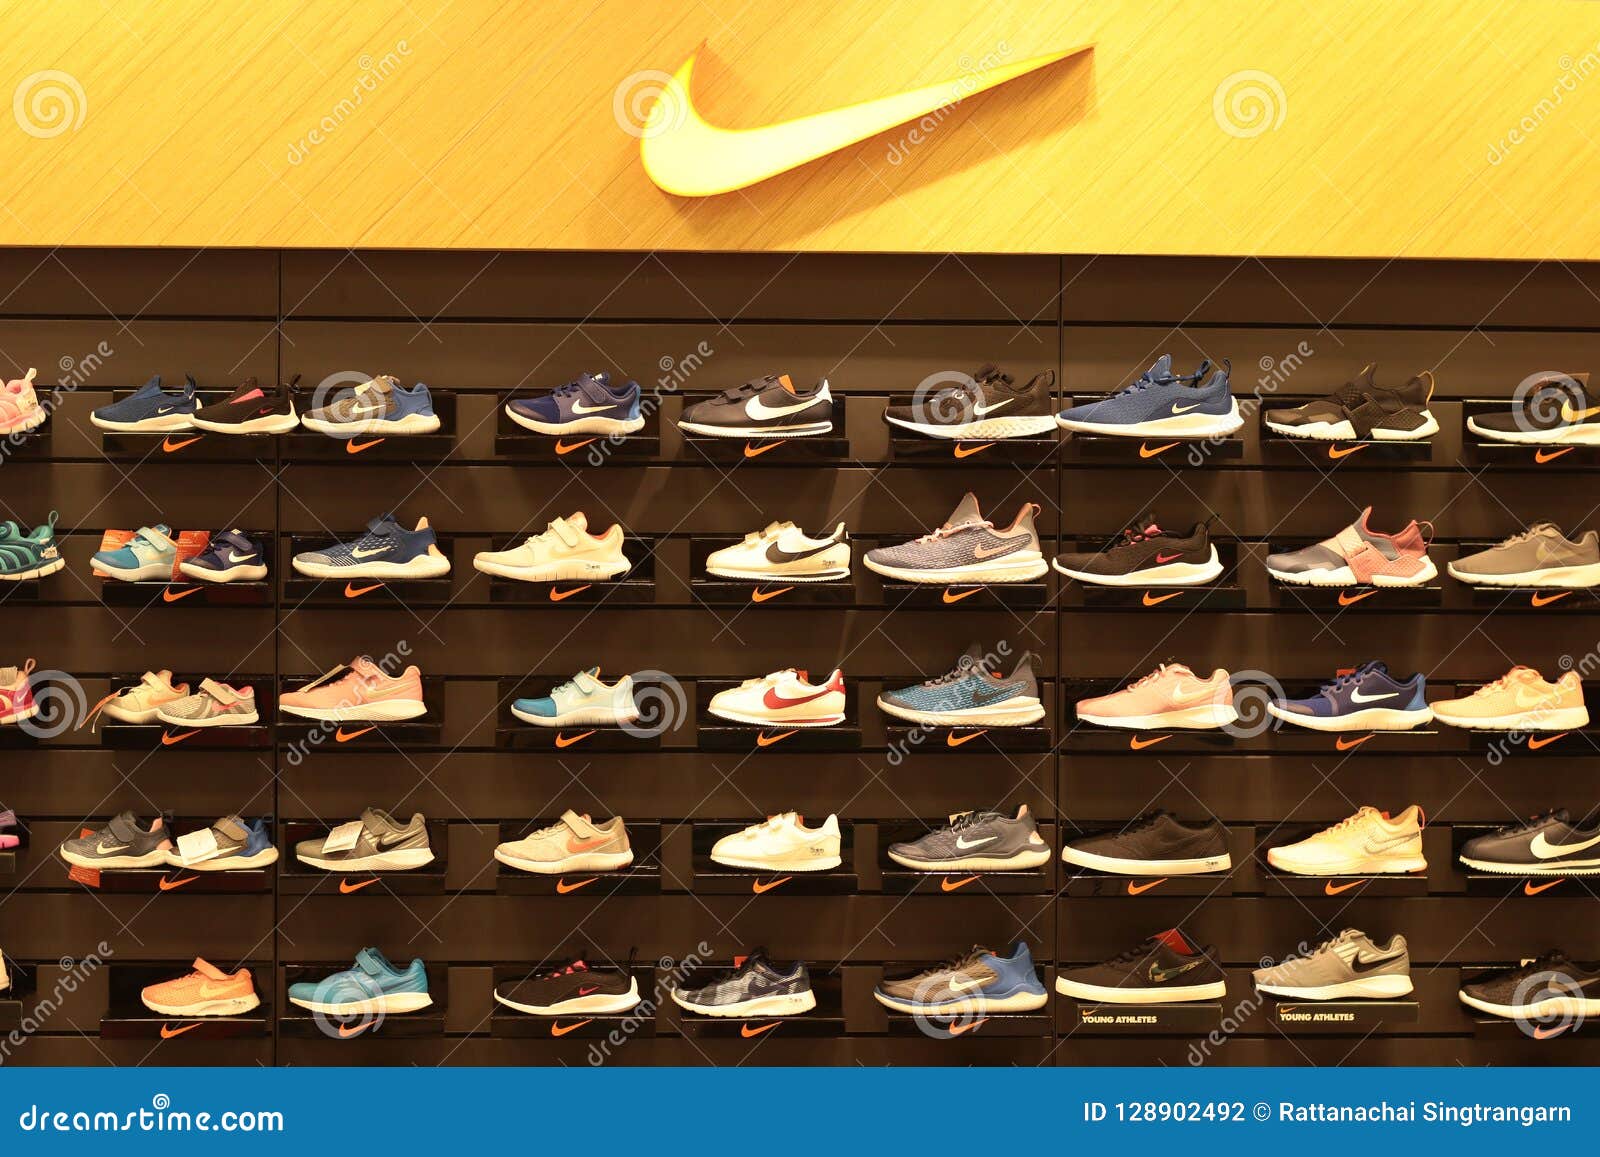 Bangkok Nike Shoes Shelf , Sport Shopping . Editorial Photography - Image of equipment, 128902492